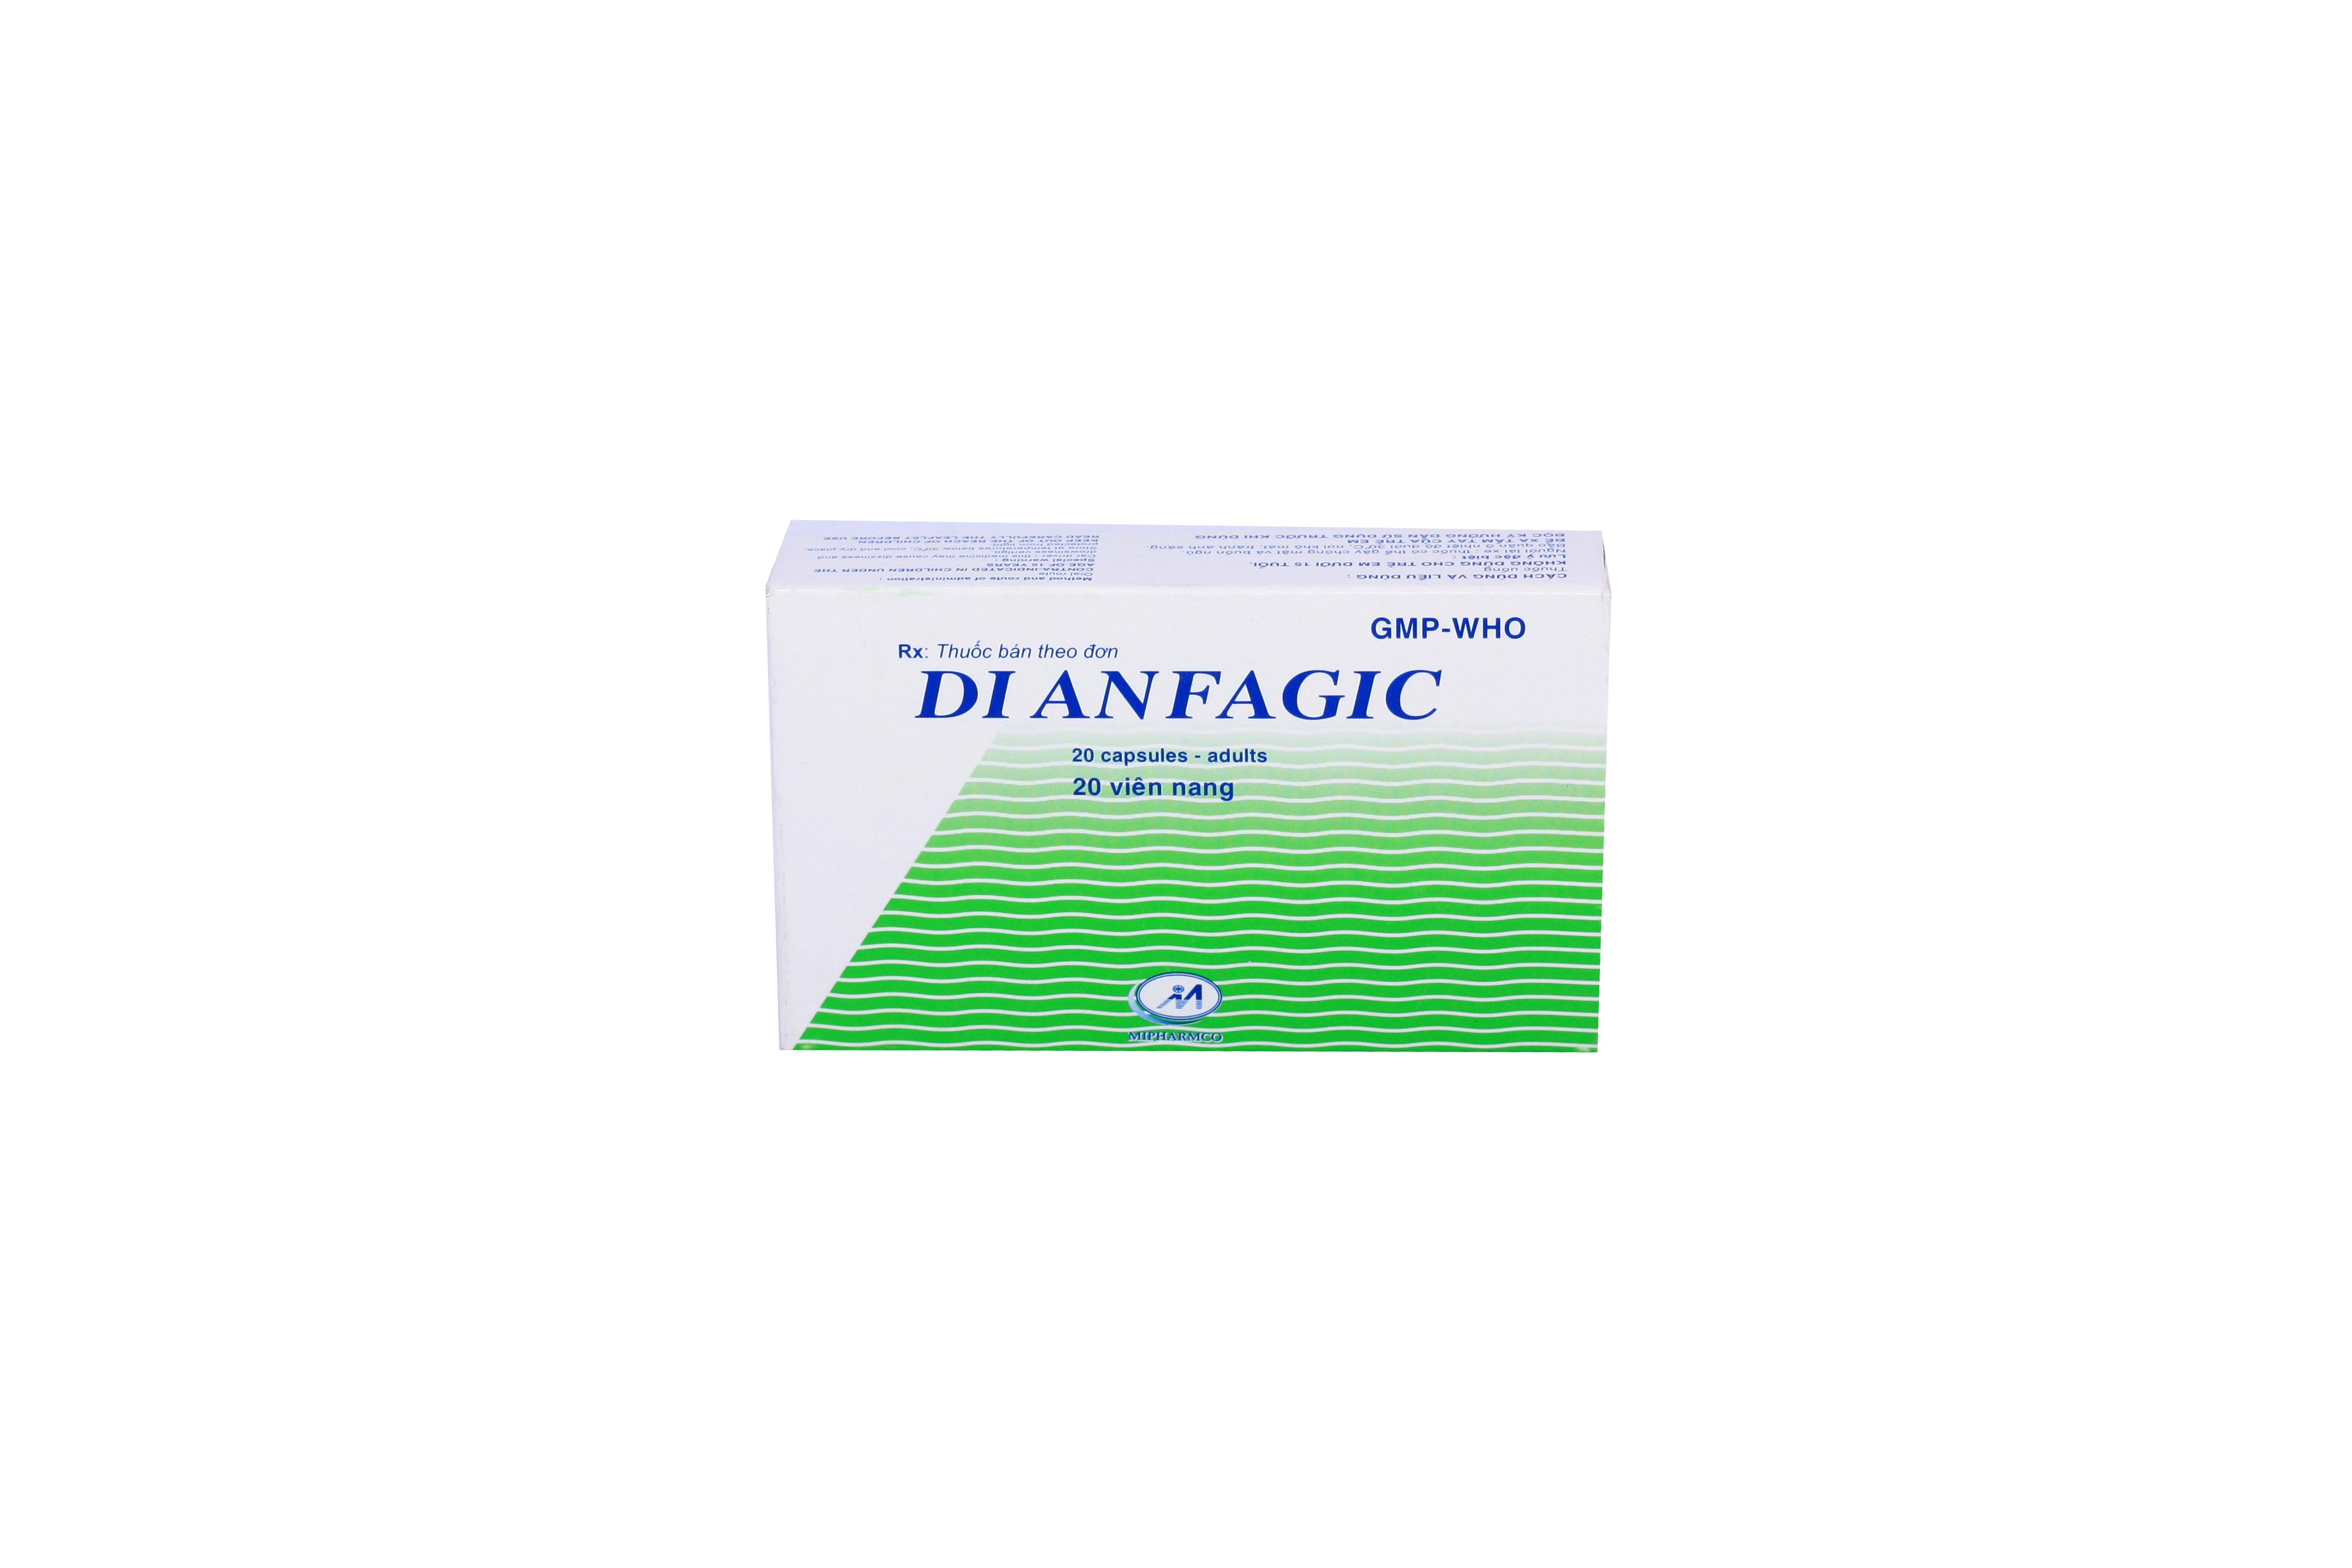 Dianfagic (Paracetamol, Tramadol) Minh Hải (H/20v)